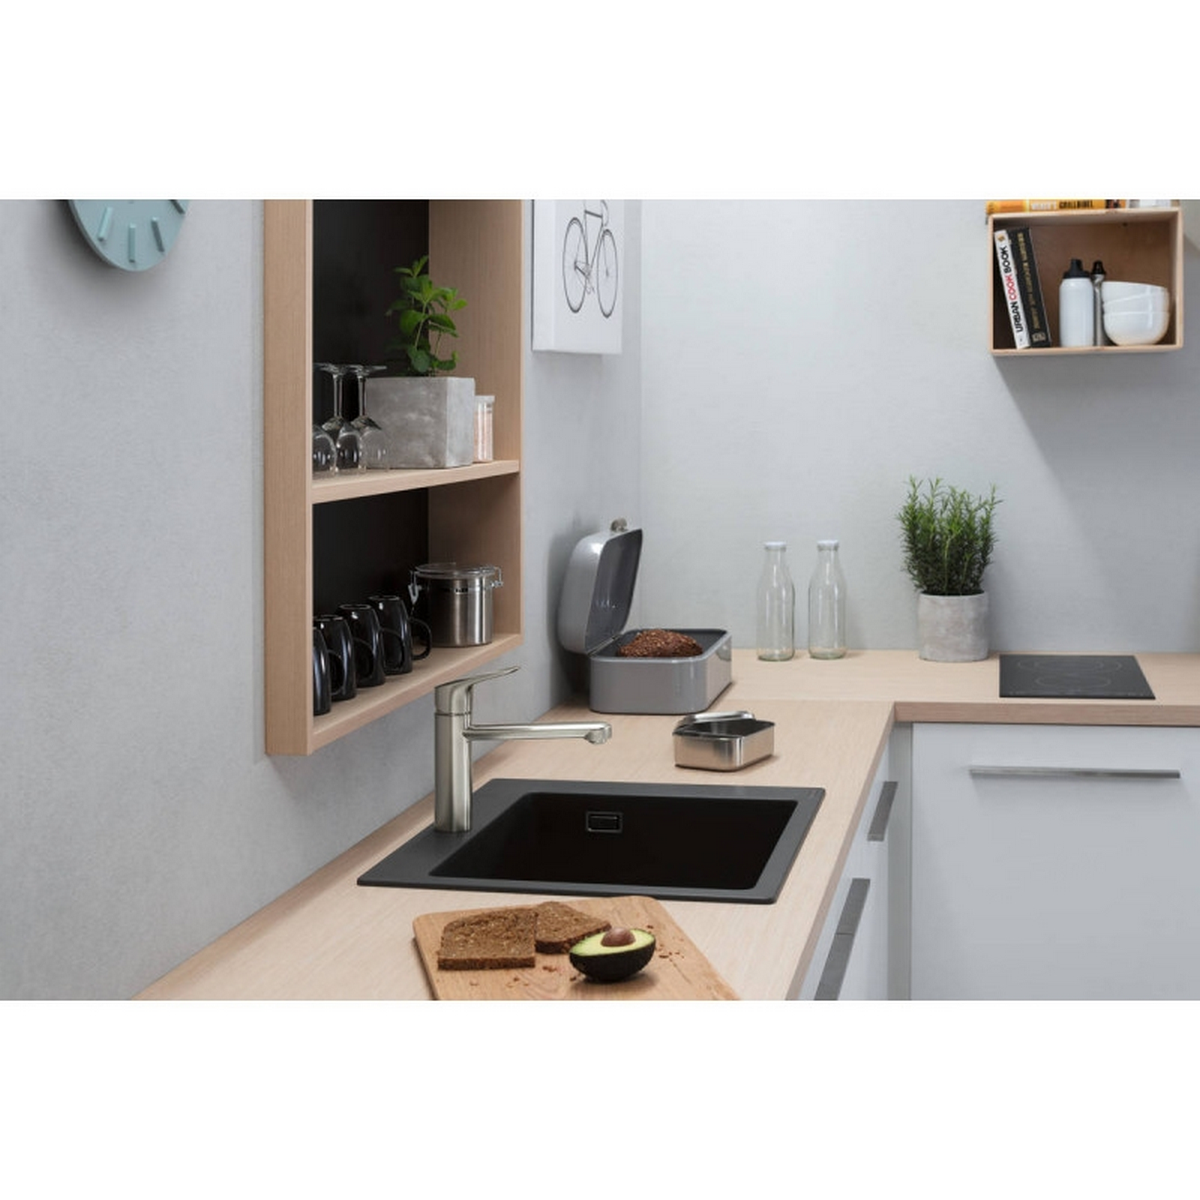 Кухонная мойка Hansgrohe S51 S510-F450 43312170 цена 17045.15 грн - фотография 2